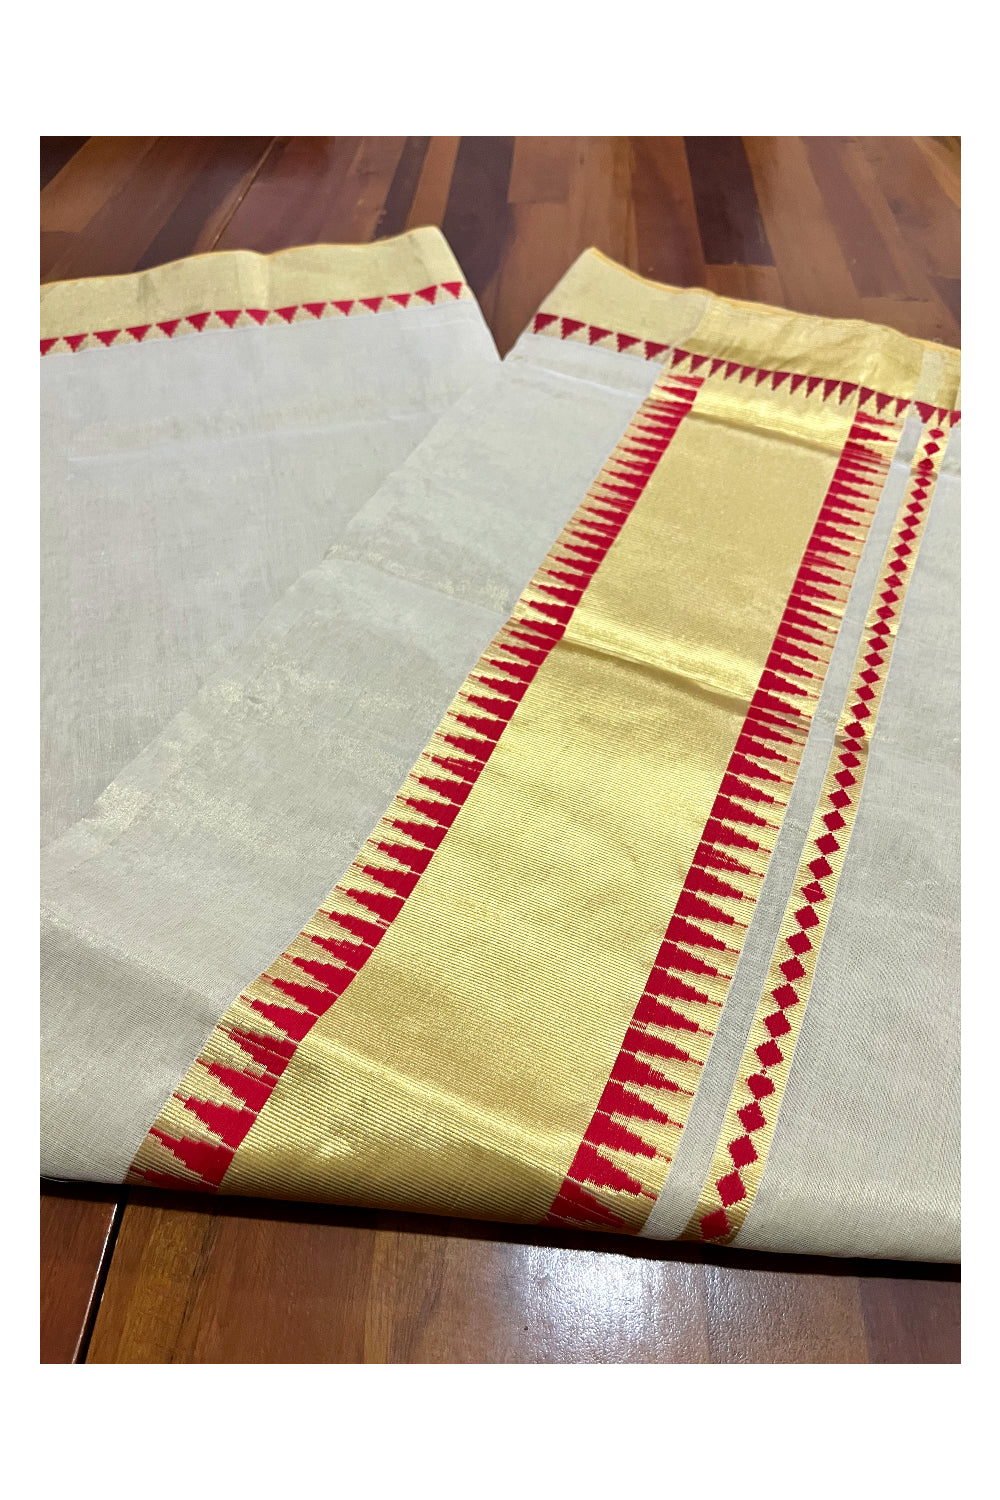 Southloom™ Premium Balaramapuram Handloom Tissue Saree with Red Temple Border